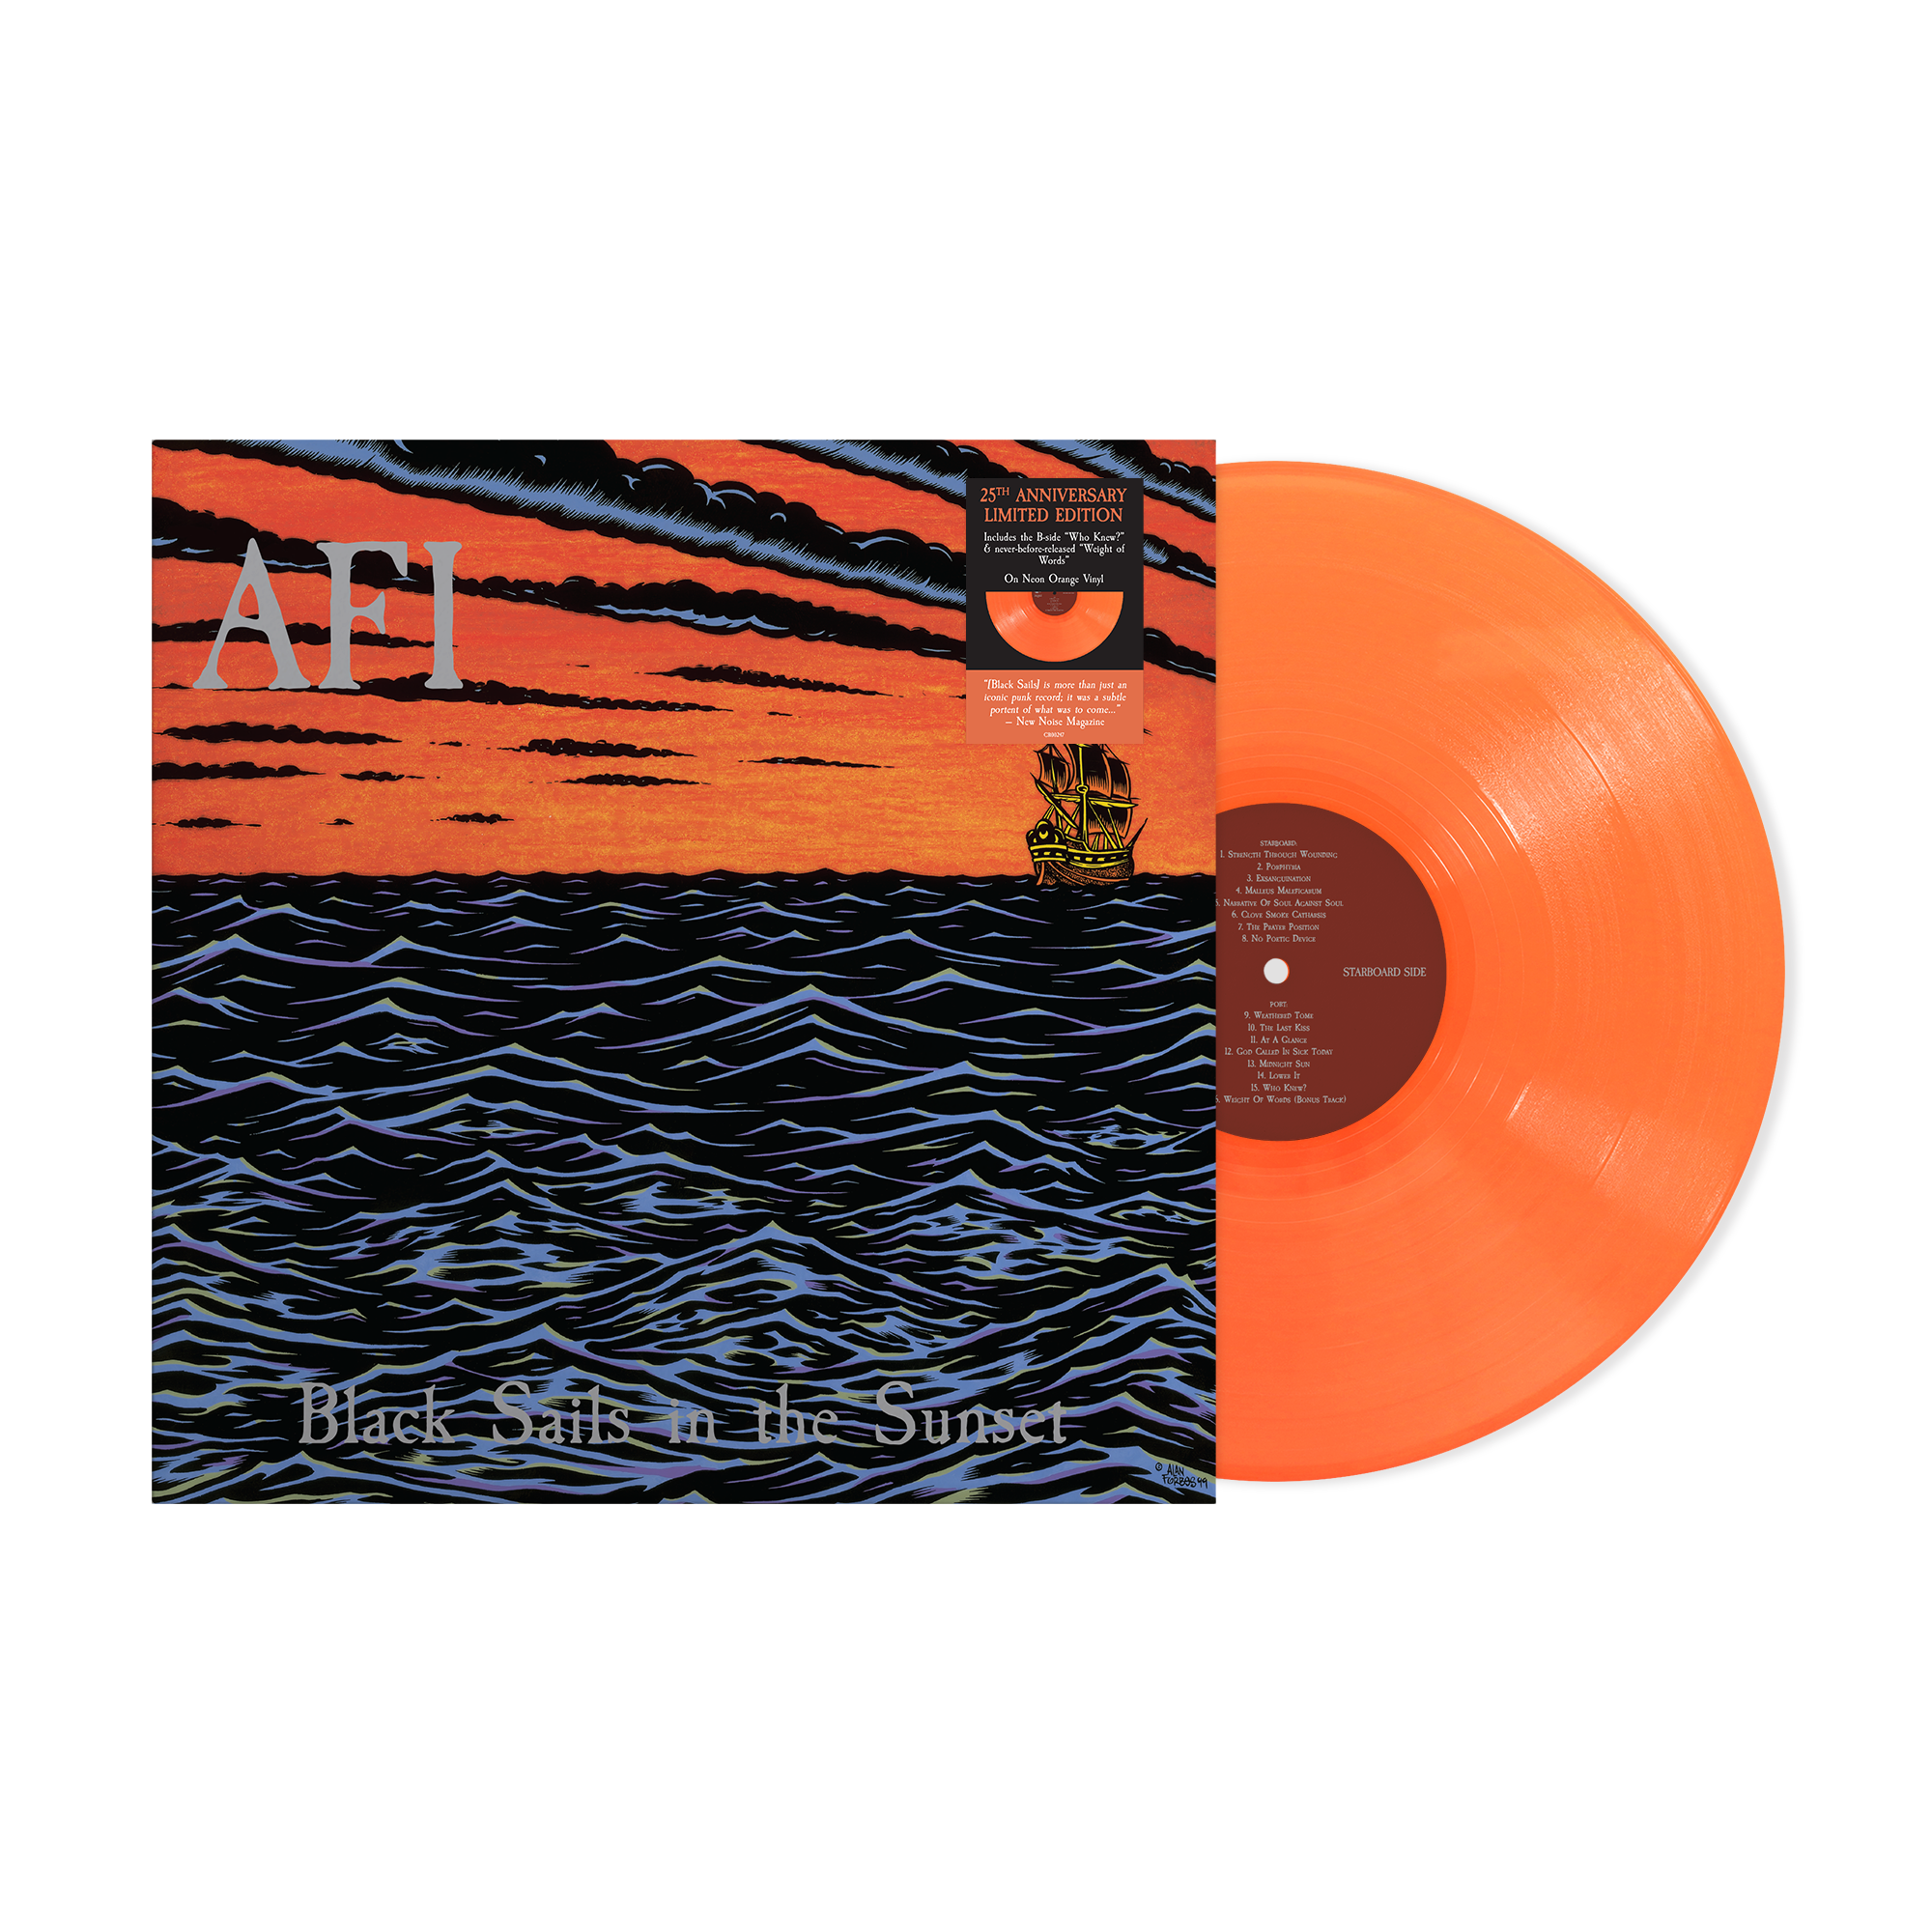 AFI - Black Sails In The Sunset: Limited Neon Orange Vinyl LP